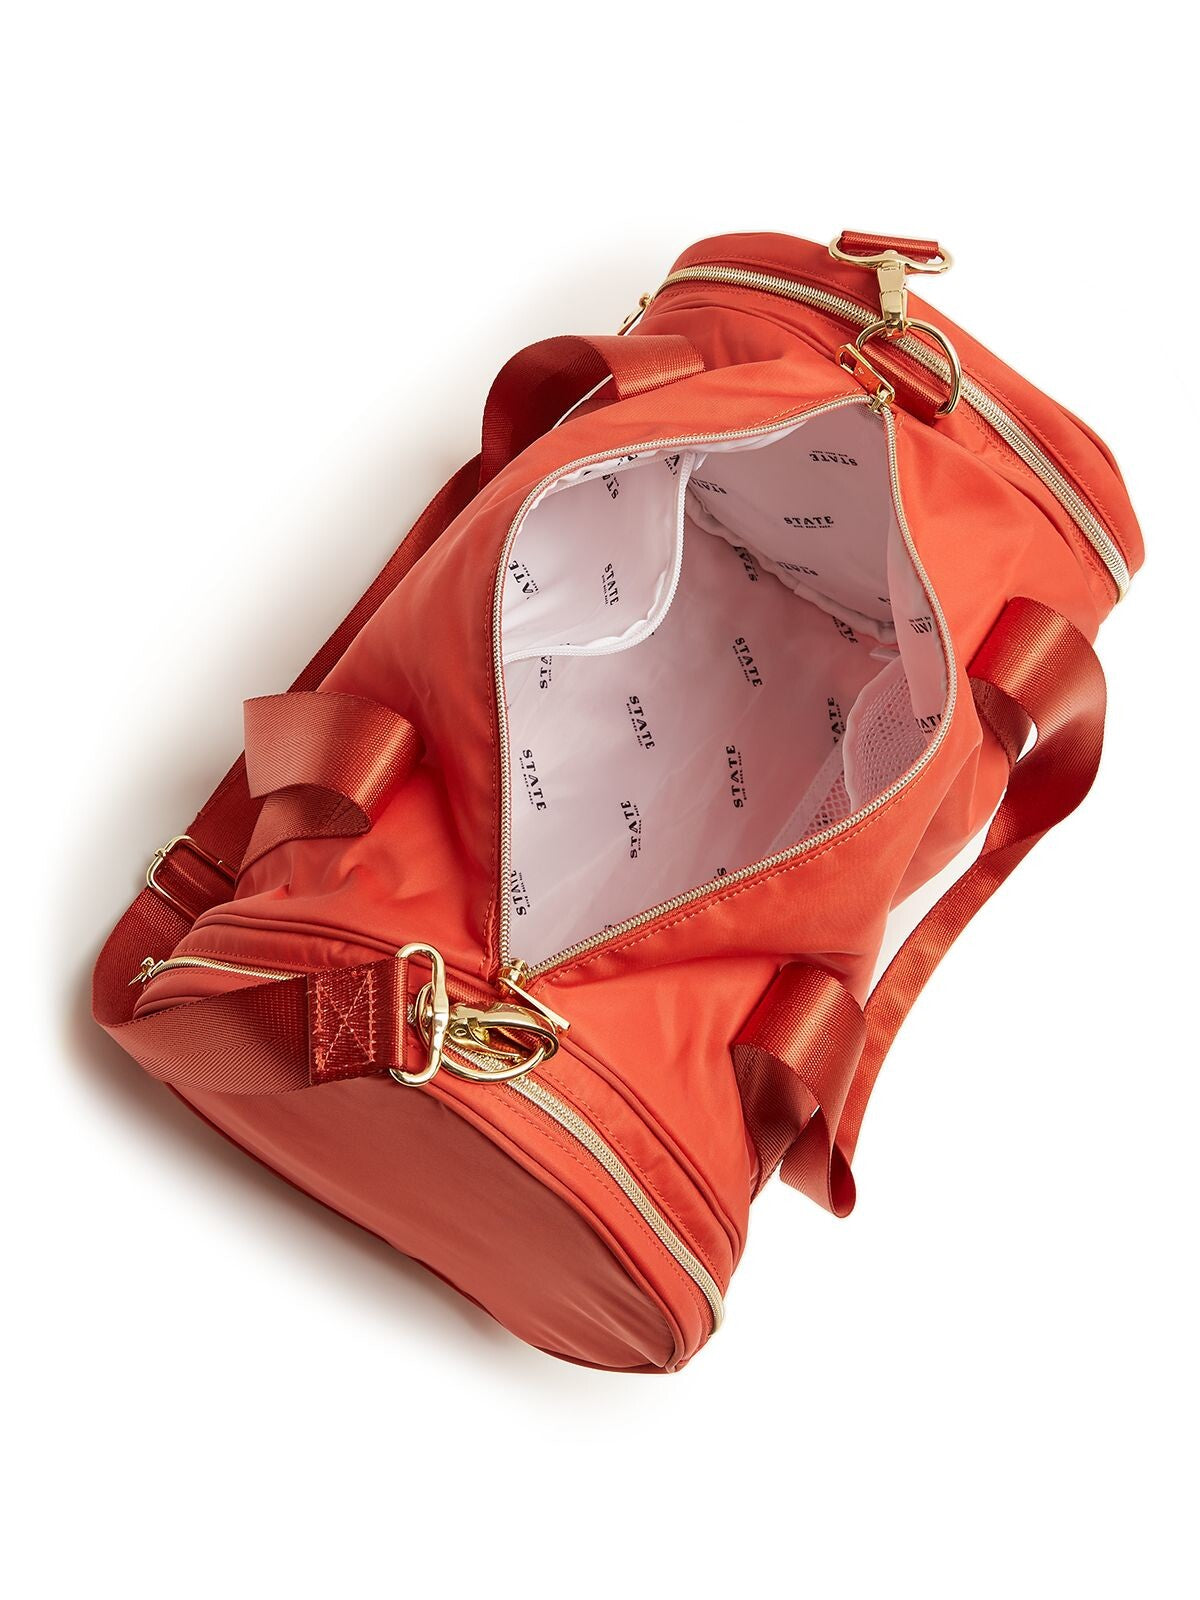 STATE BAGS Women's Orange Nylon Adjustable Strap Duffle & Weekend Bag